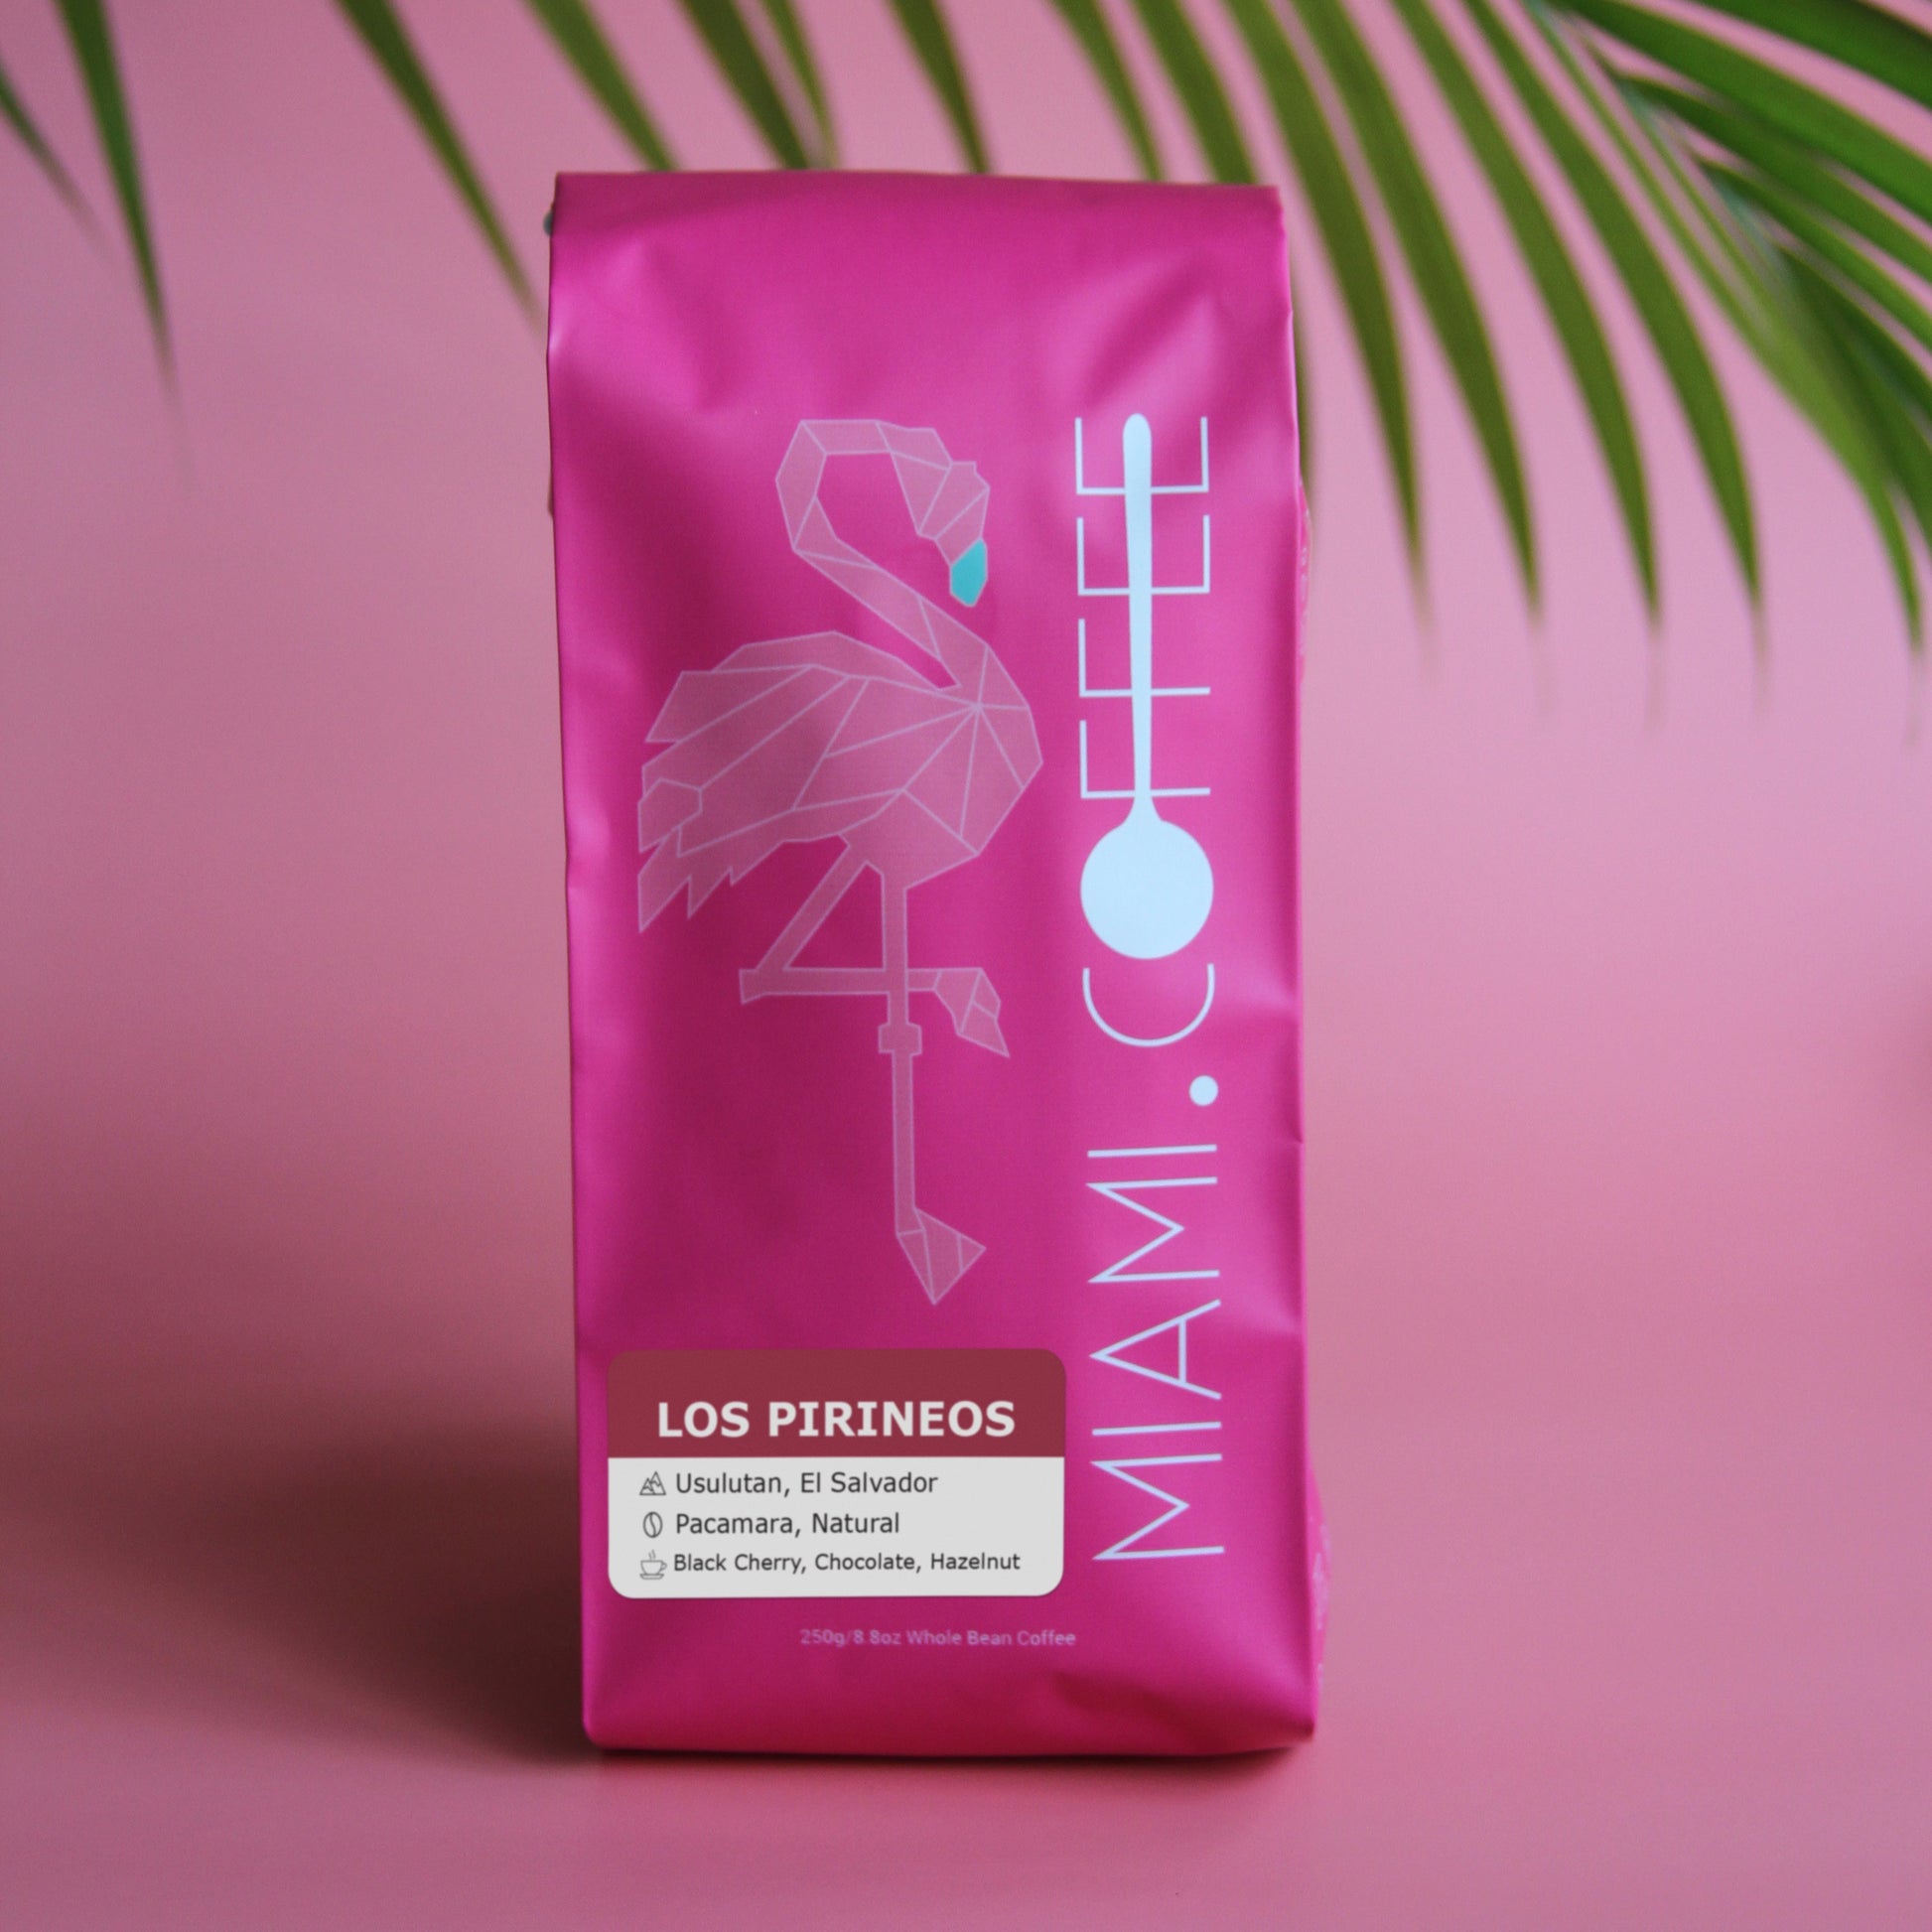 250 gram bag of Miami.Coffee El Salvador Finca Los Pirineos, Producer Diego Baraona, Pacamara, natural process, tasting notes: Black Cherry, Dark Chocolate, Roasted Hazelnut